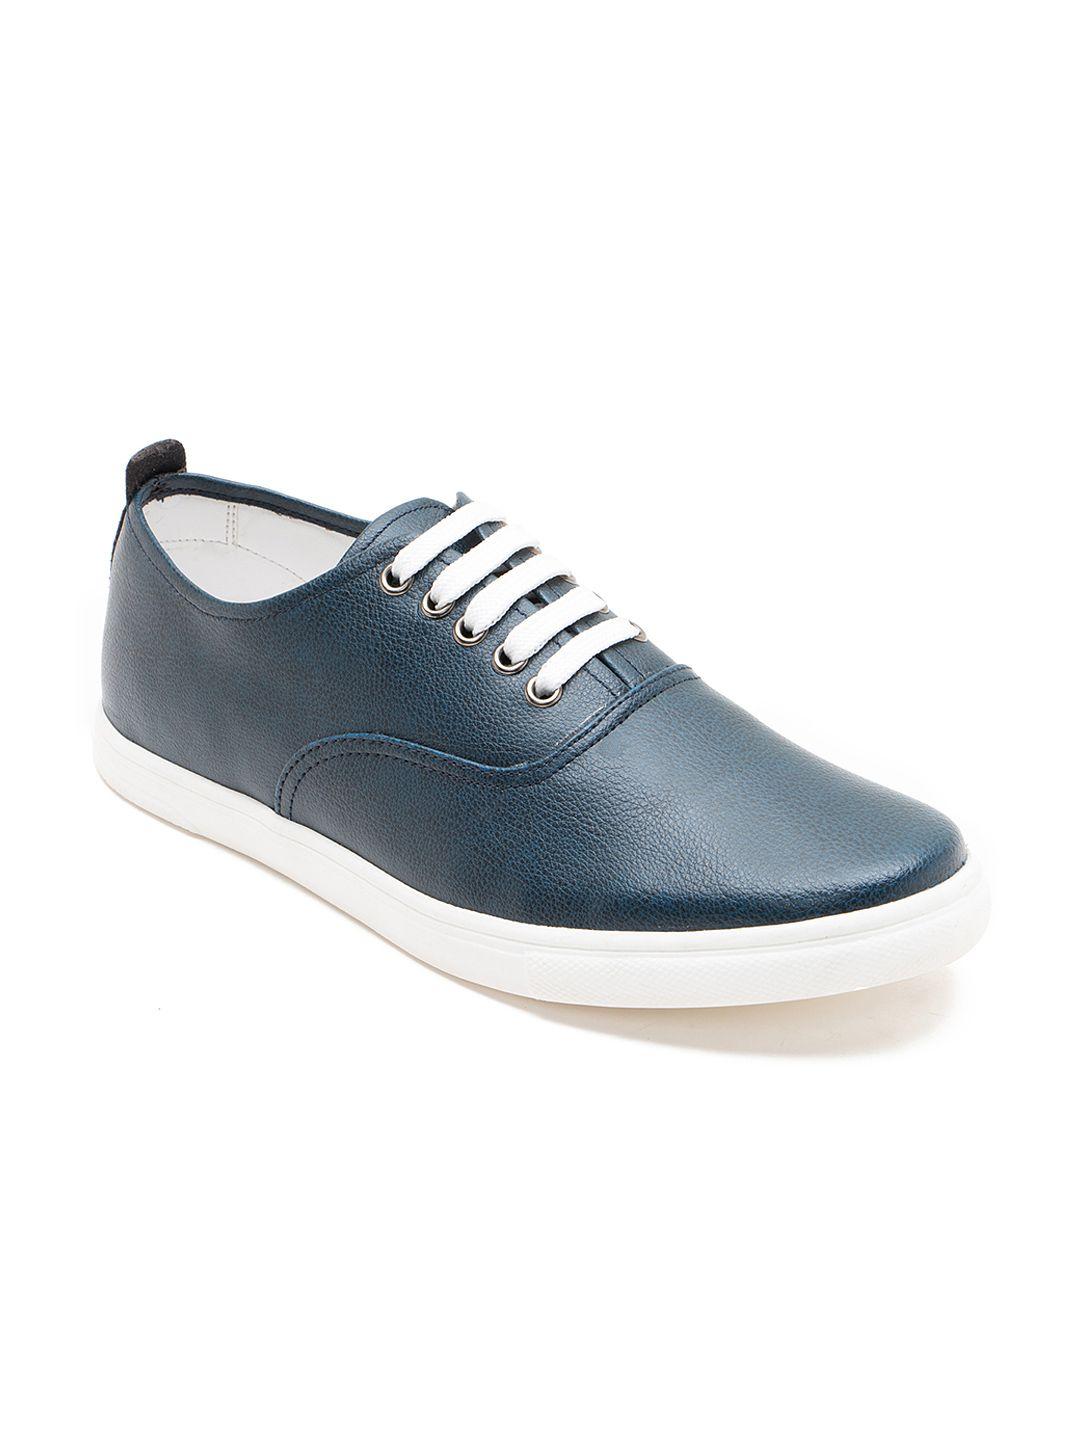 franco-leone-men-blue-sneakers